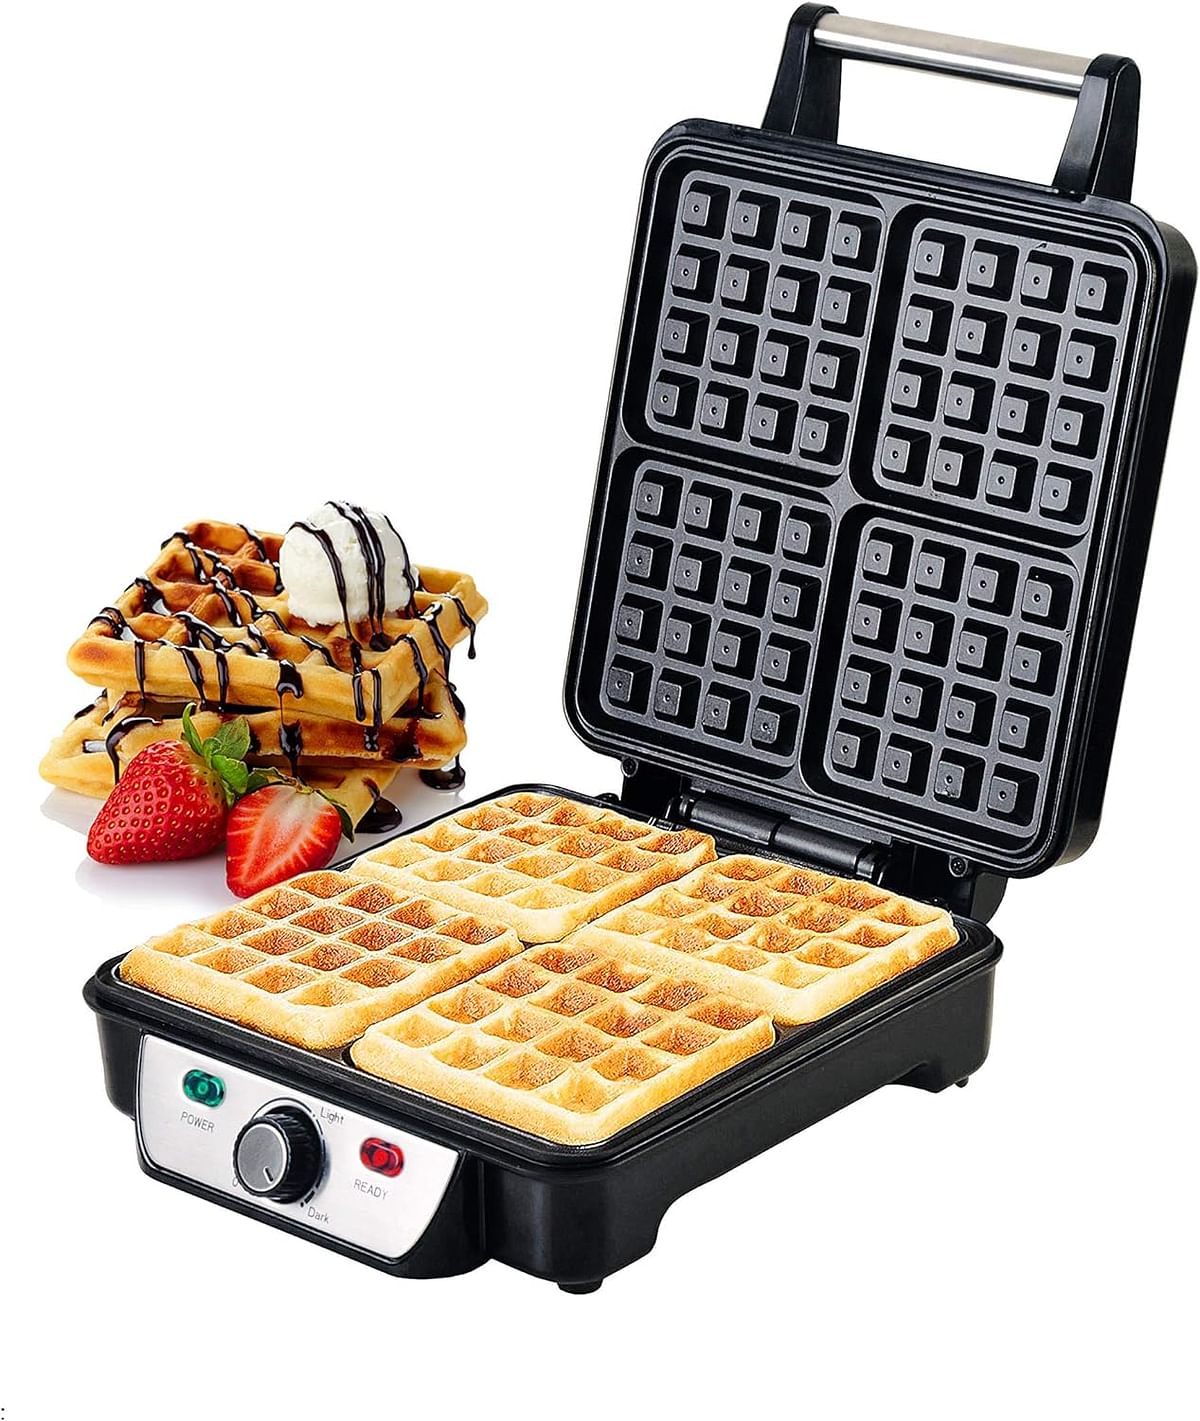 Geepas GWM5417 Electric Waffle Maker 1100W- 4 Slice Non-Stick Electric Belgian Waffle Maker with Adjustable Temperature Control